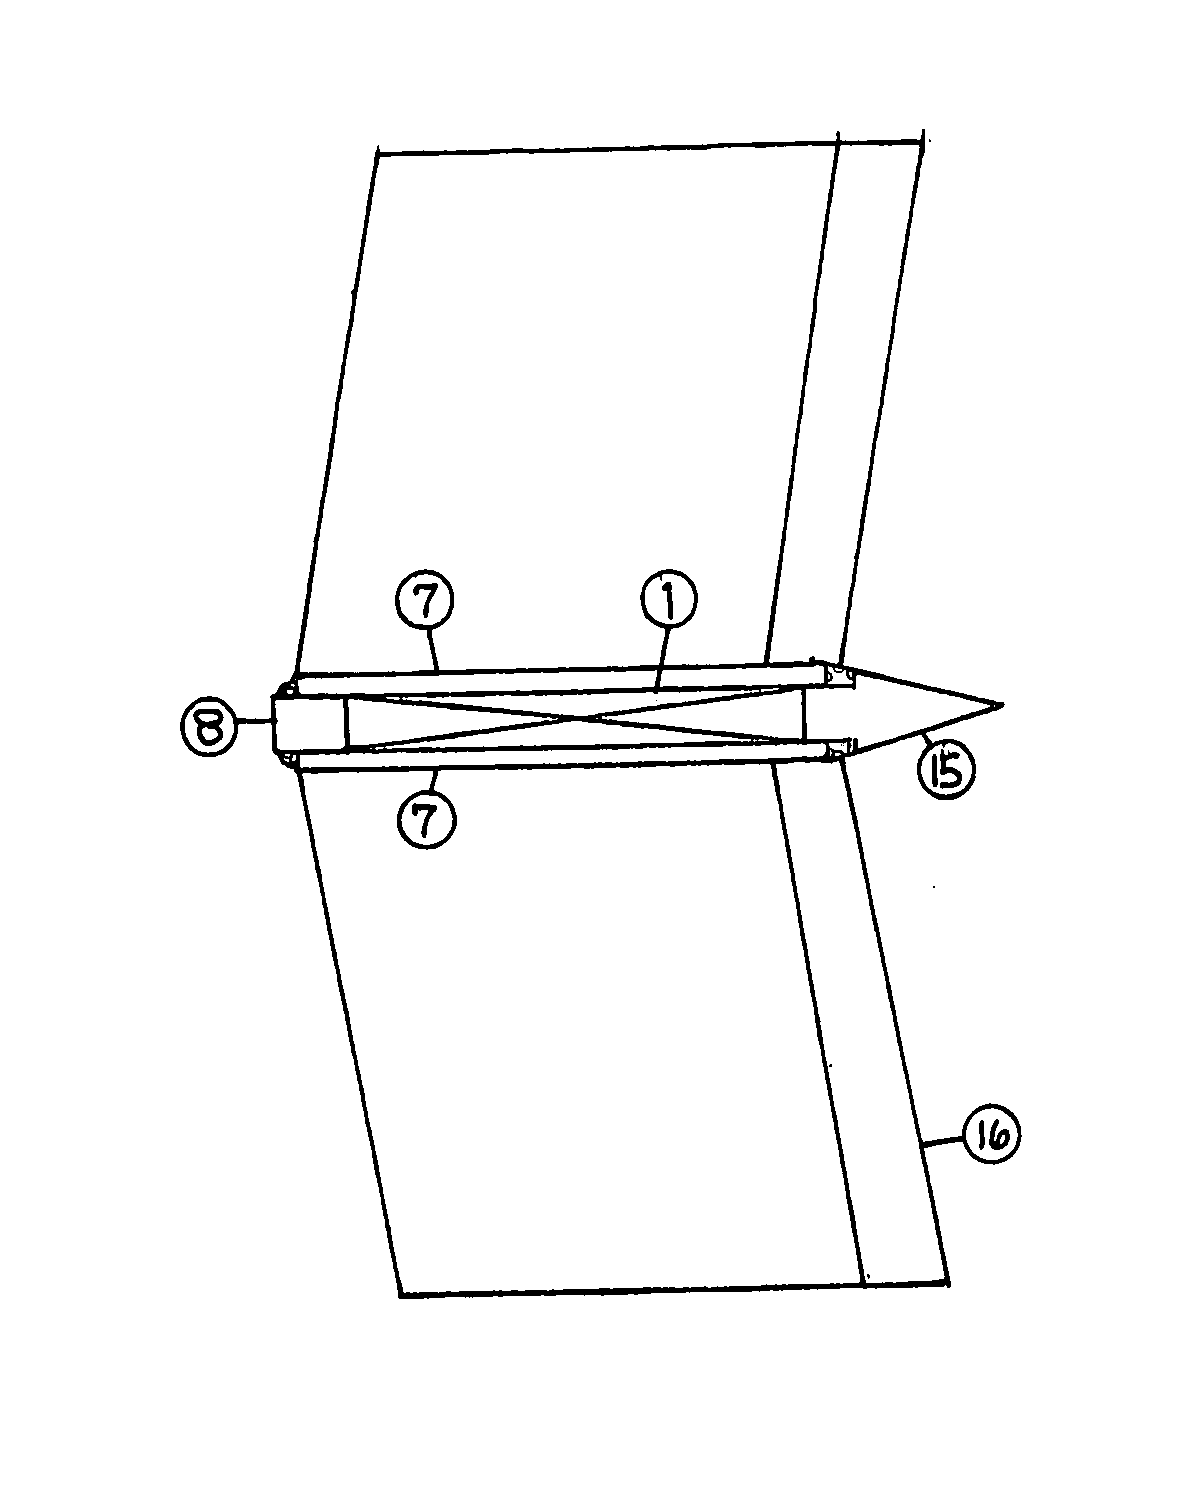 Single post convertible split wedge system